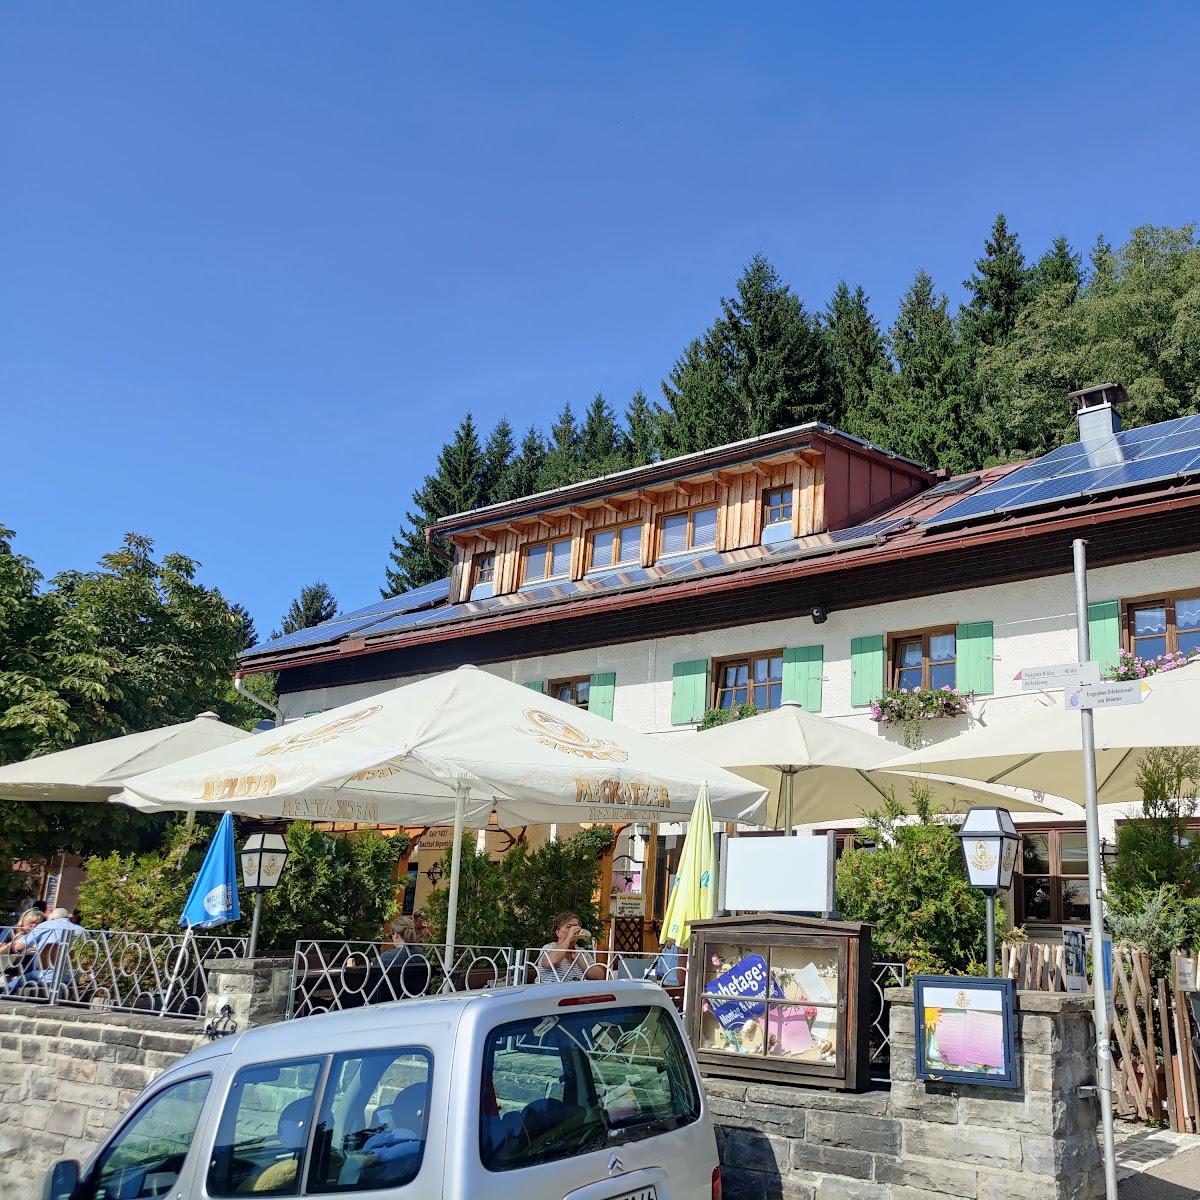 Restaurant "Berggasthof Alpenblick" in Burgberg im Allgäu